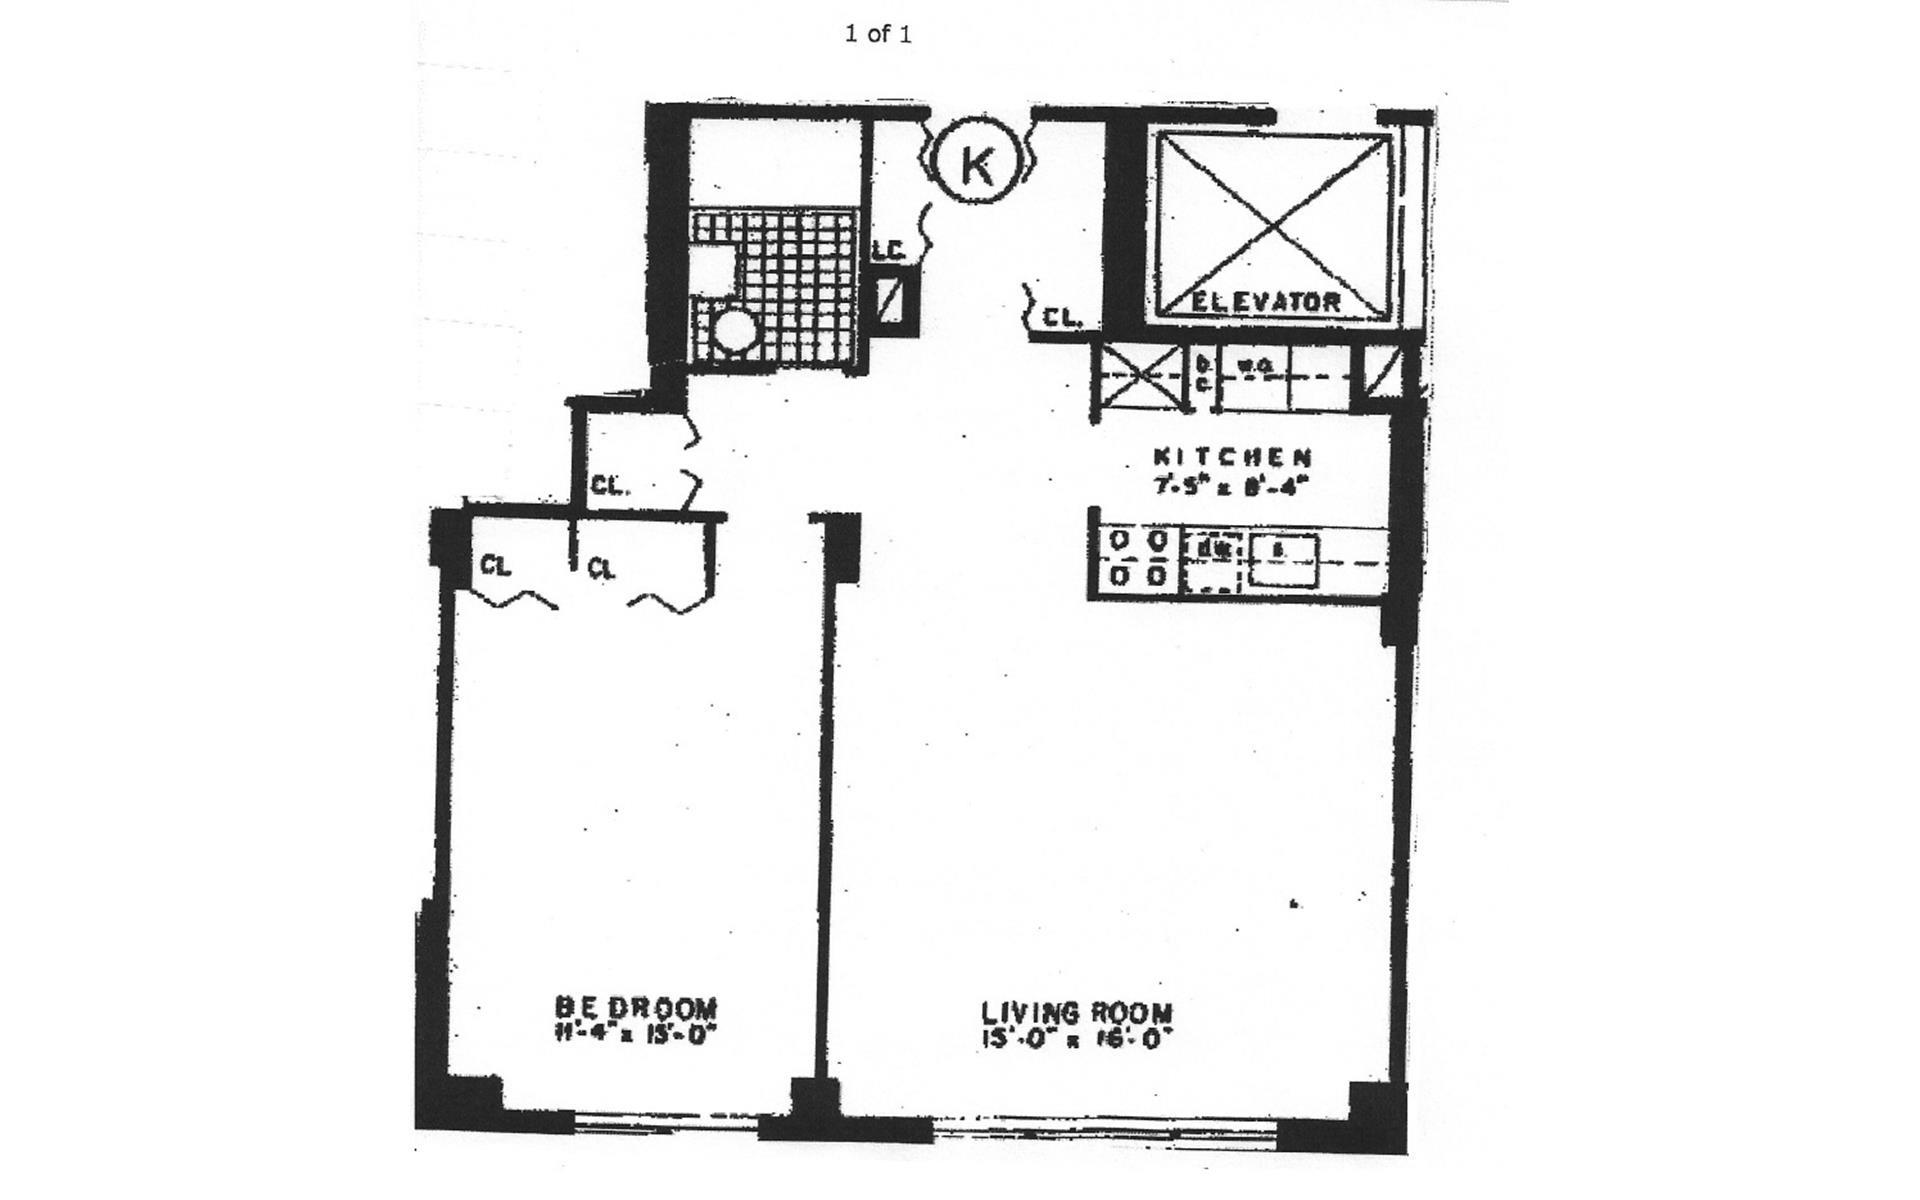 Floorplan for 220 East 60th Street, 14K